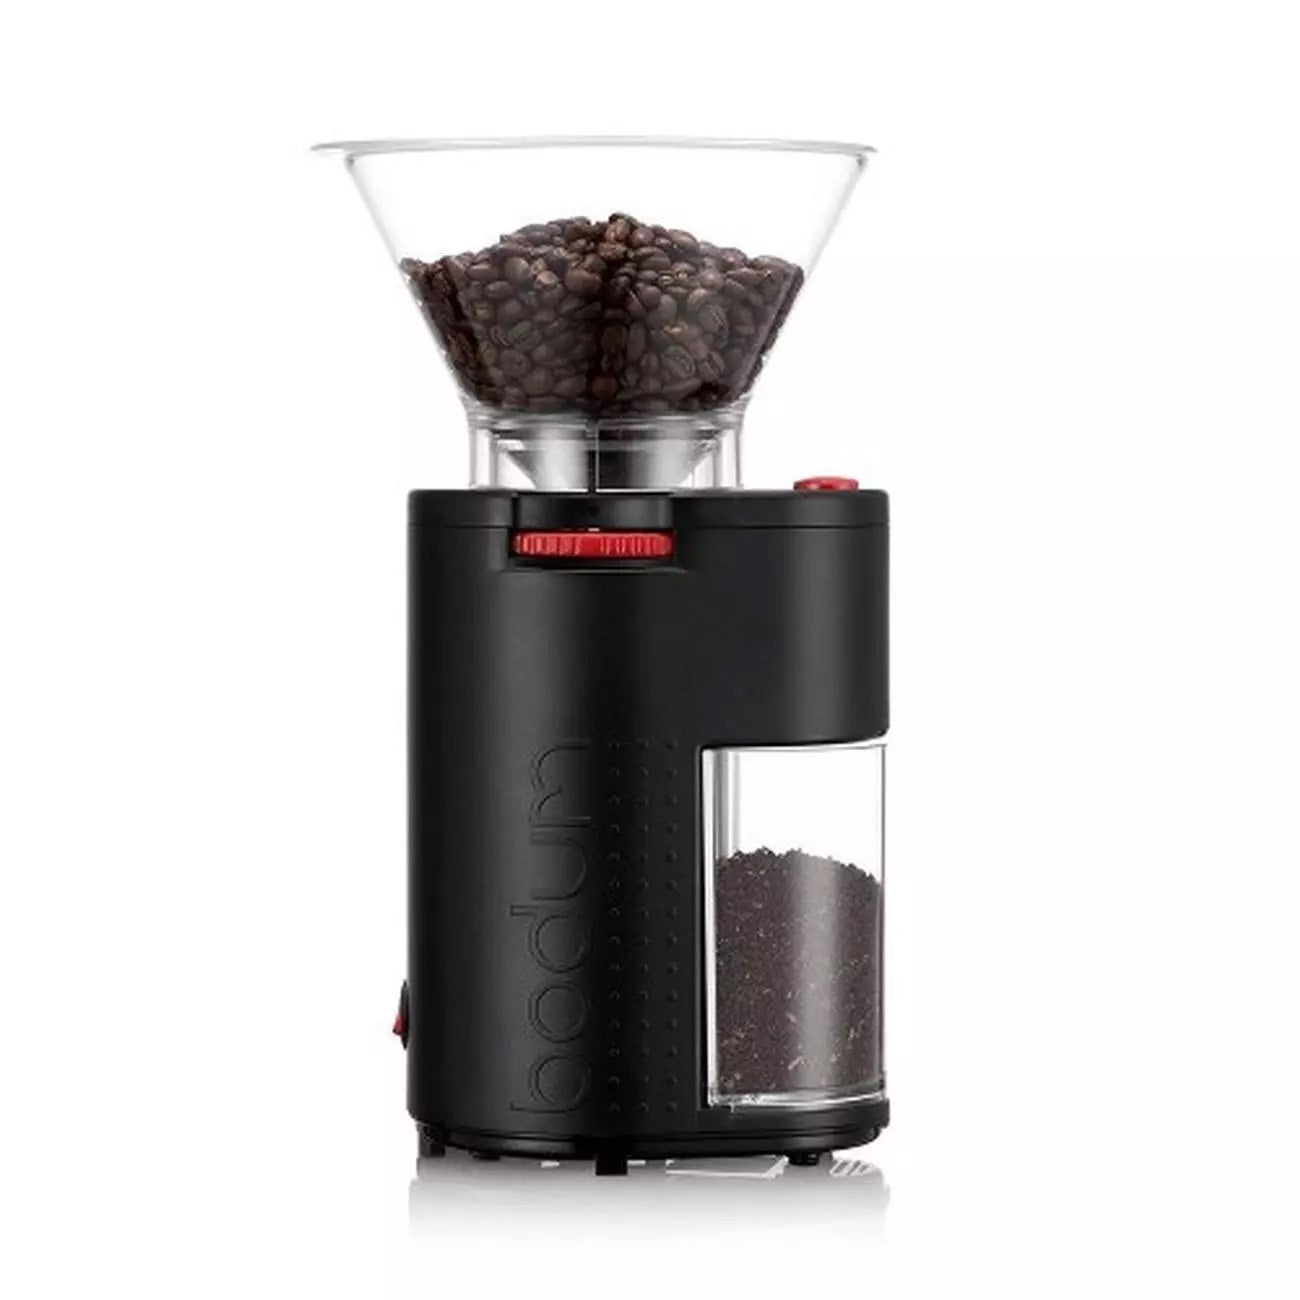 Bodum electric coffee grinder